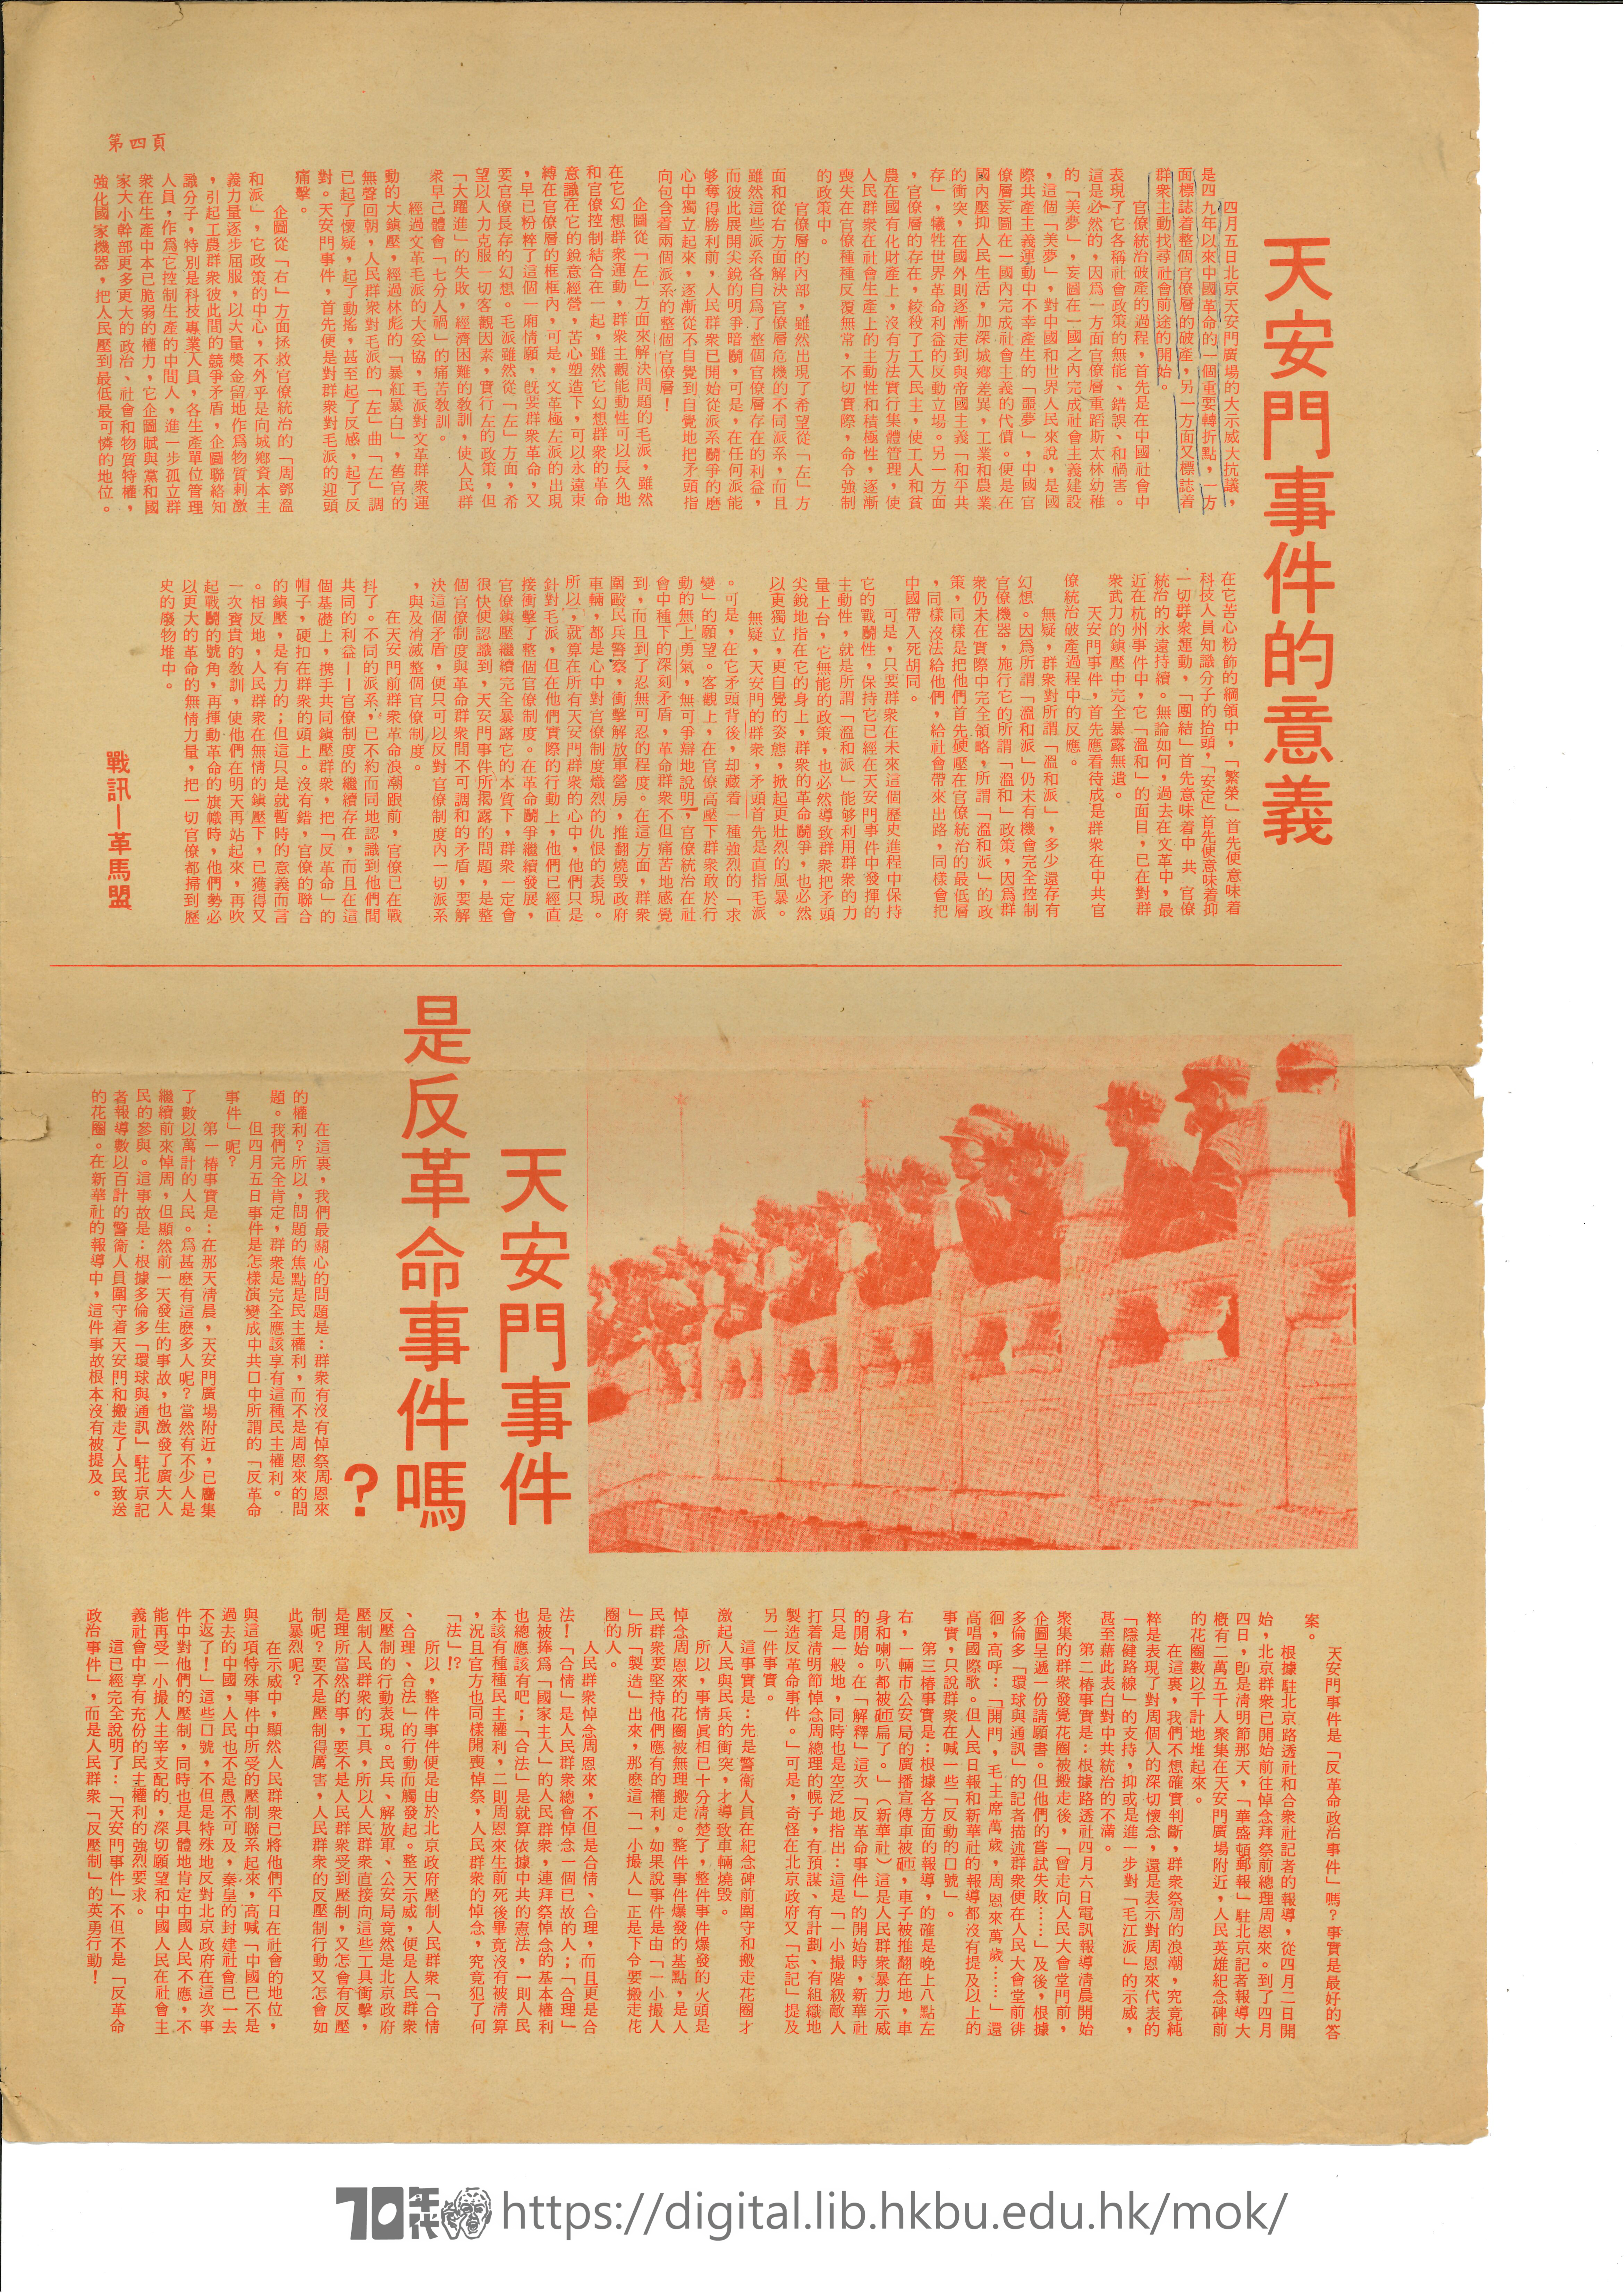   Special issue on Tiananmen Incident 青年戰線, 社會主義青年社, 戰訊, 70戰綫 